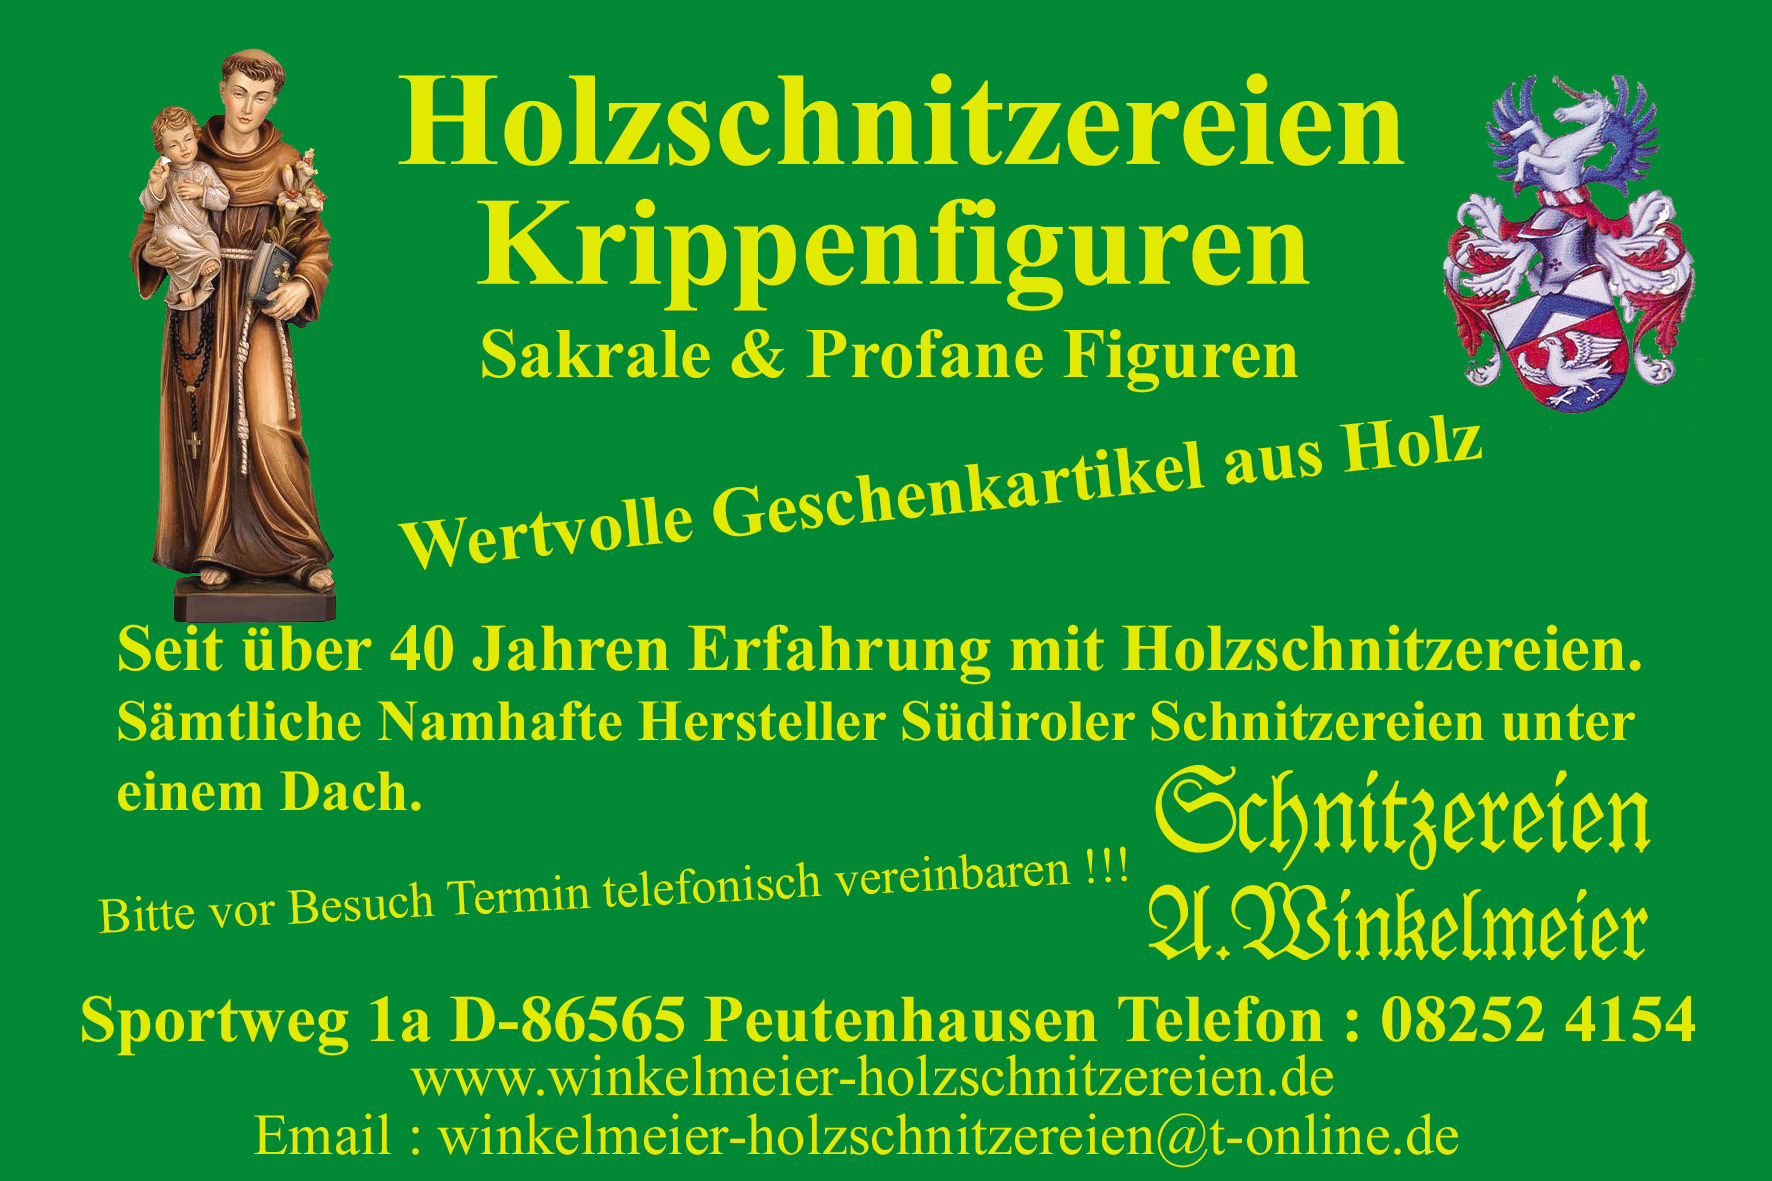 (c) Winkelmeier-holzschnitzereien.de